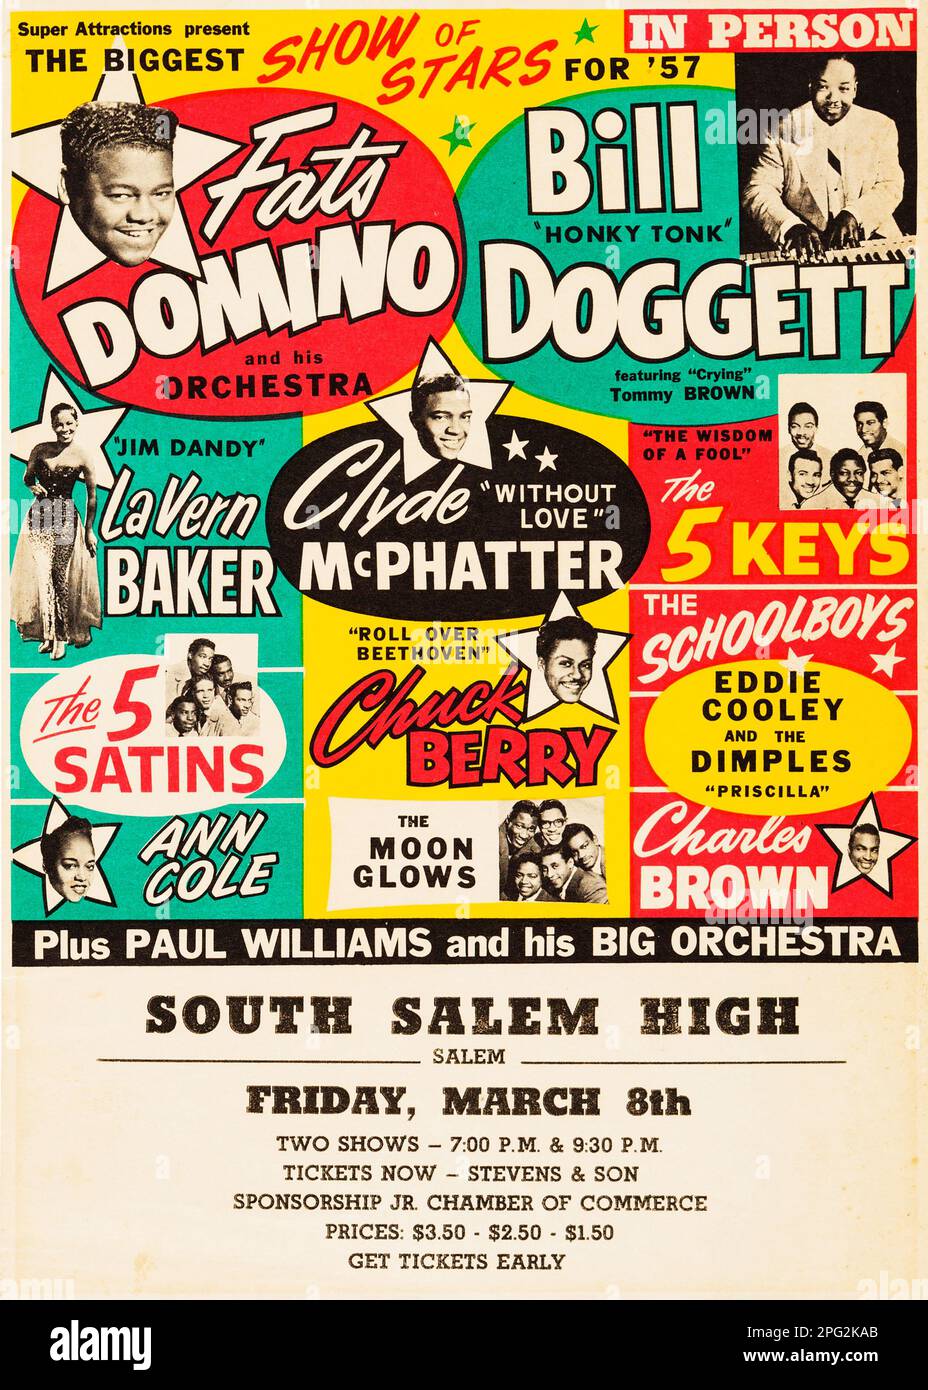 Fats Domino - Chuck Berry - Bill Doggett und mehr - South Salem High Concert Handbill (Super Attractions Present, 1957) Stockfoto